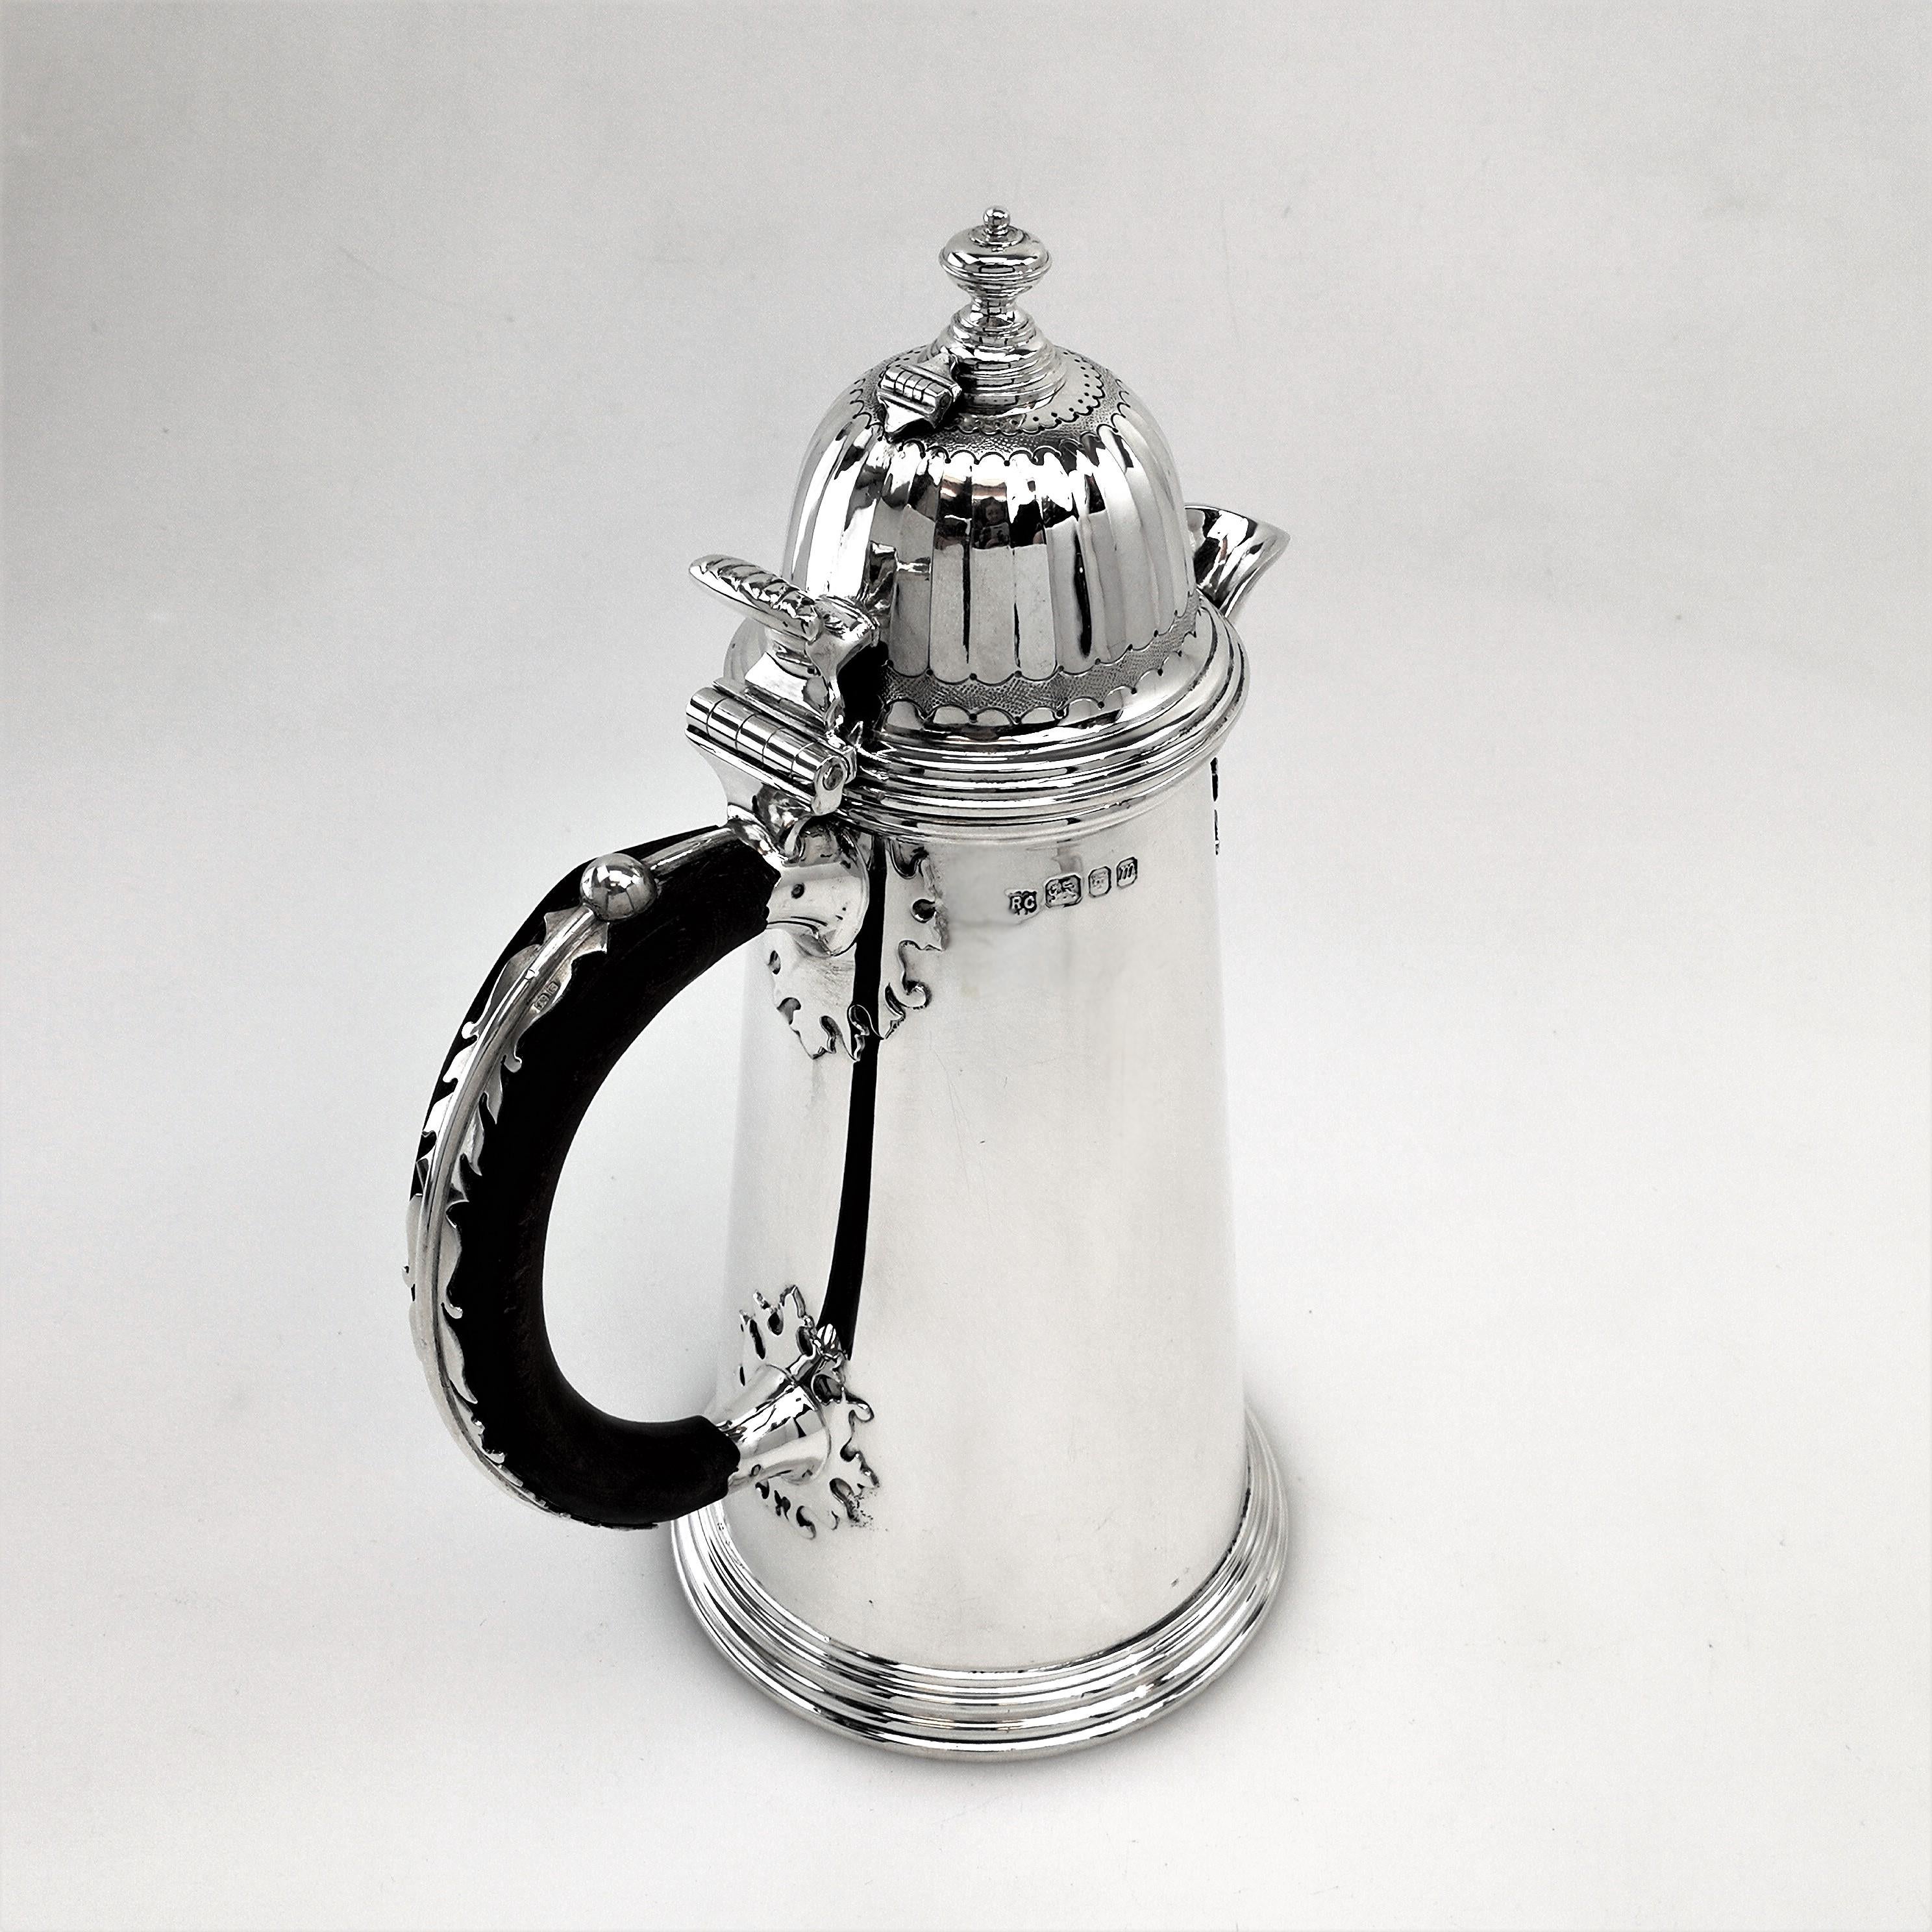 Queen Anne Sterling Silver 5-Piece Tea & Coffee Set 'Lukin Tea Set' 1967-1968